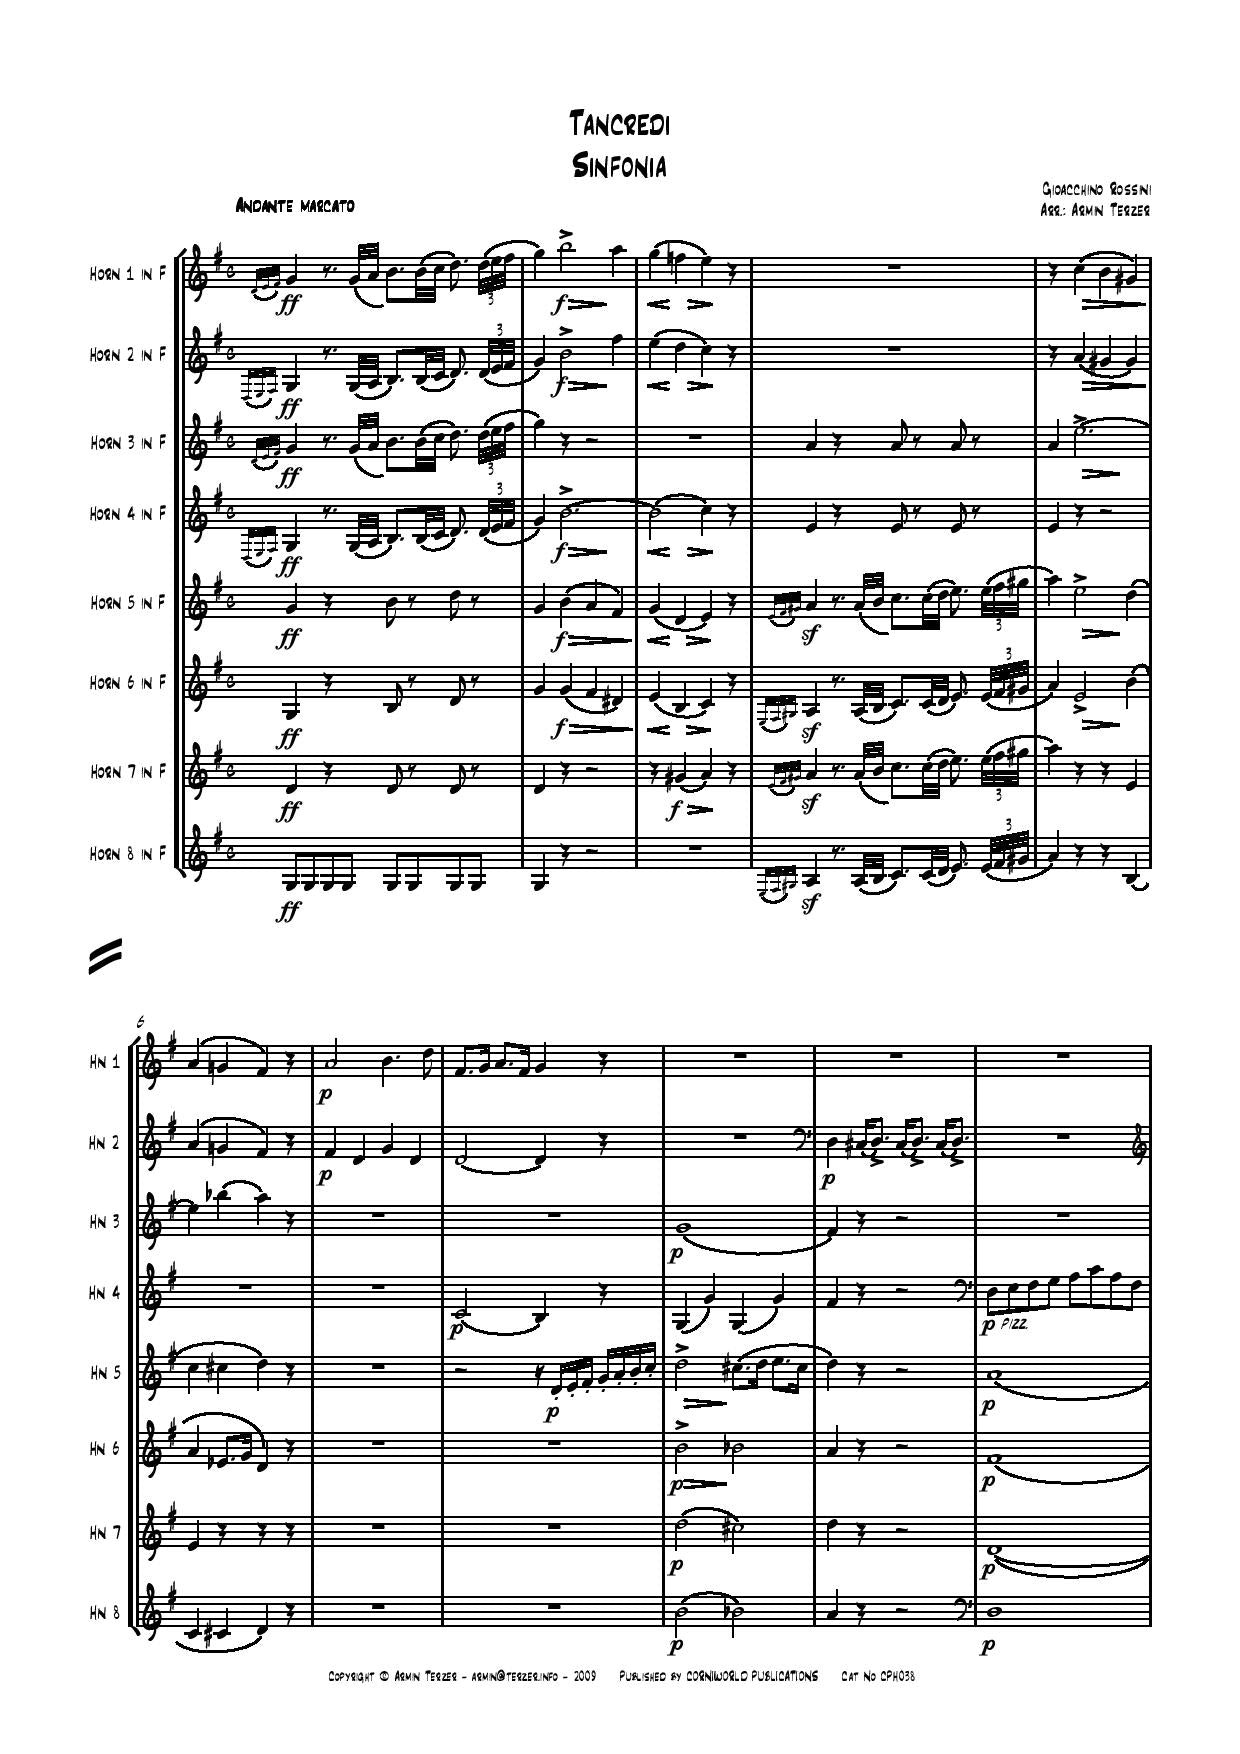 Tancredi Sinfonia CPH038